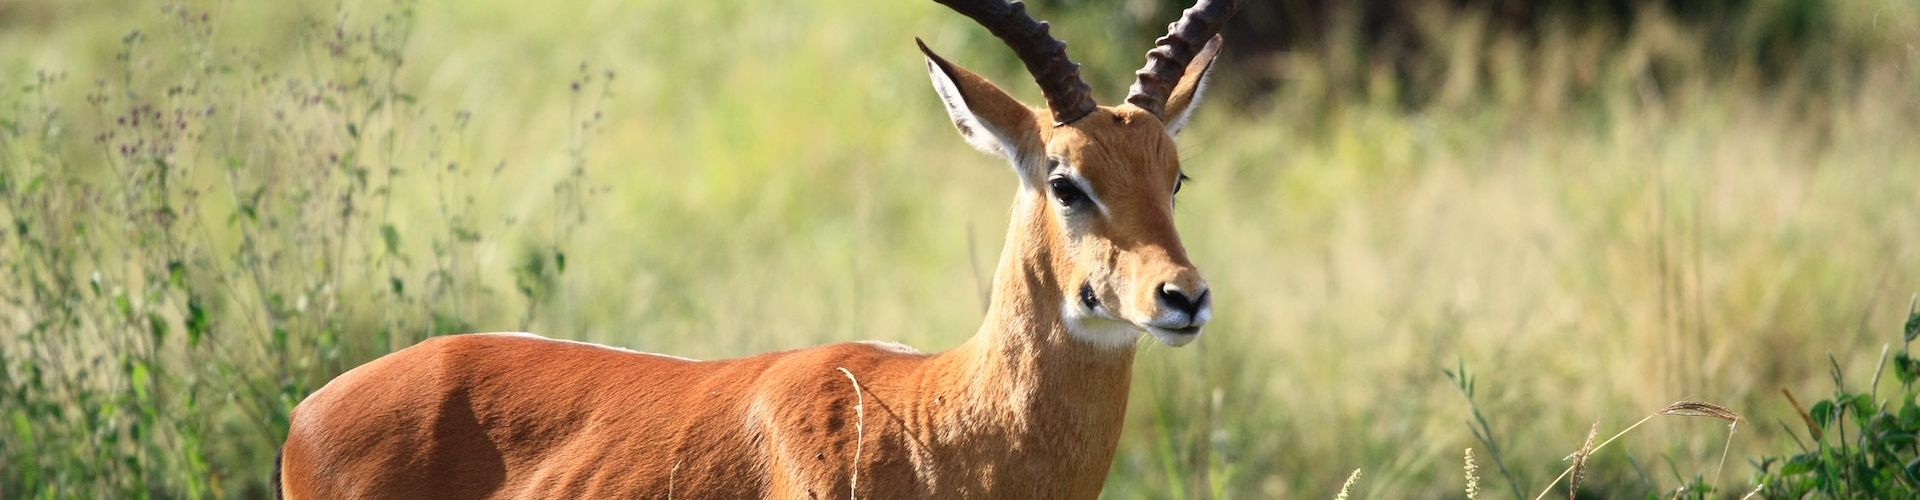 De nombreux types d'antilopes peuvent être observés lors d'un safari en Tanzanie.